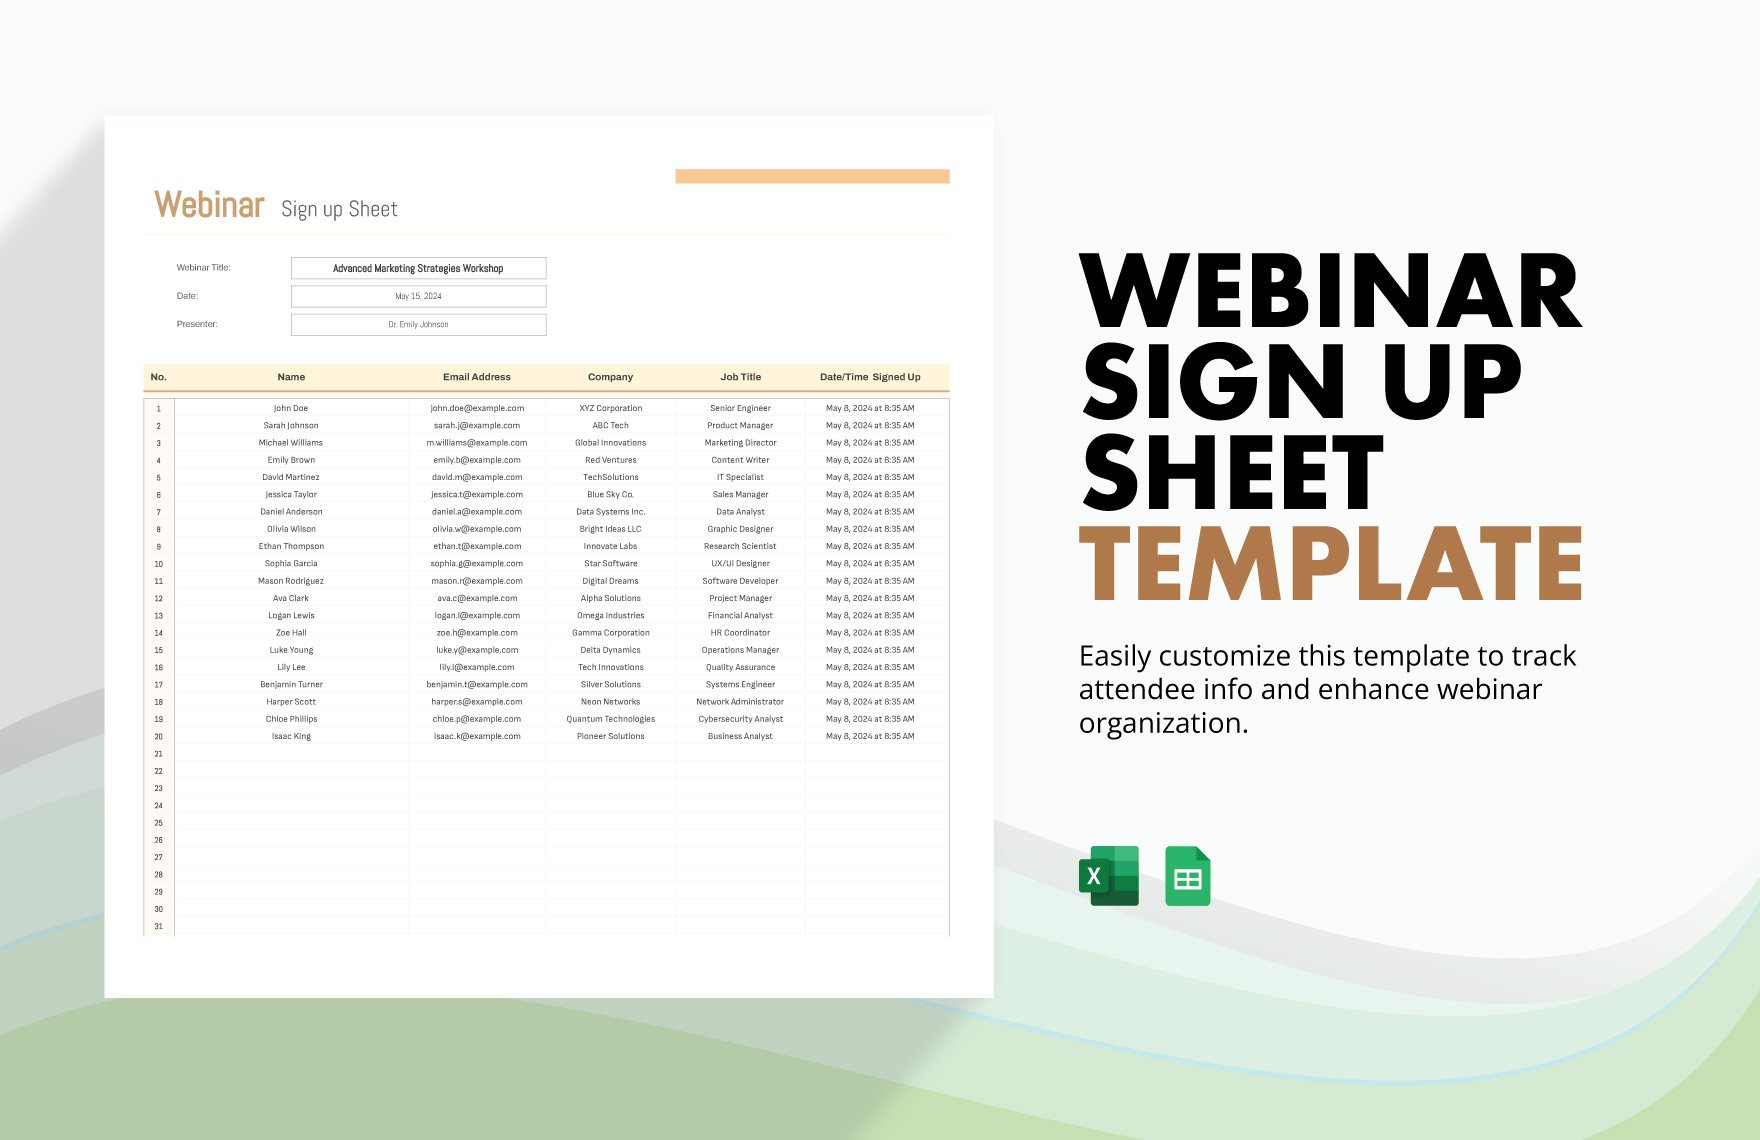 Webinar Sign up Sheet Template in Excel, Google Sheets